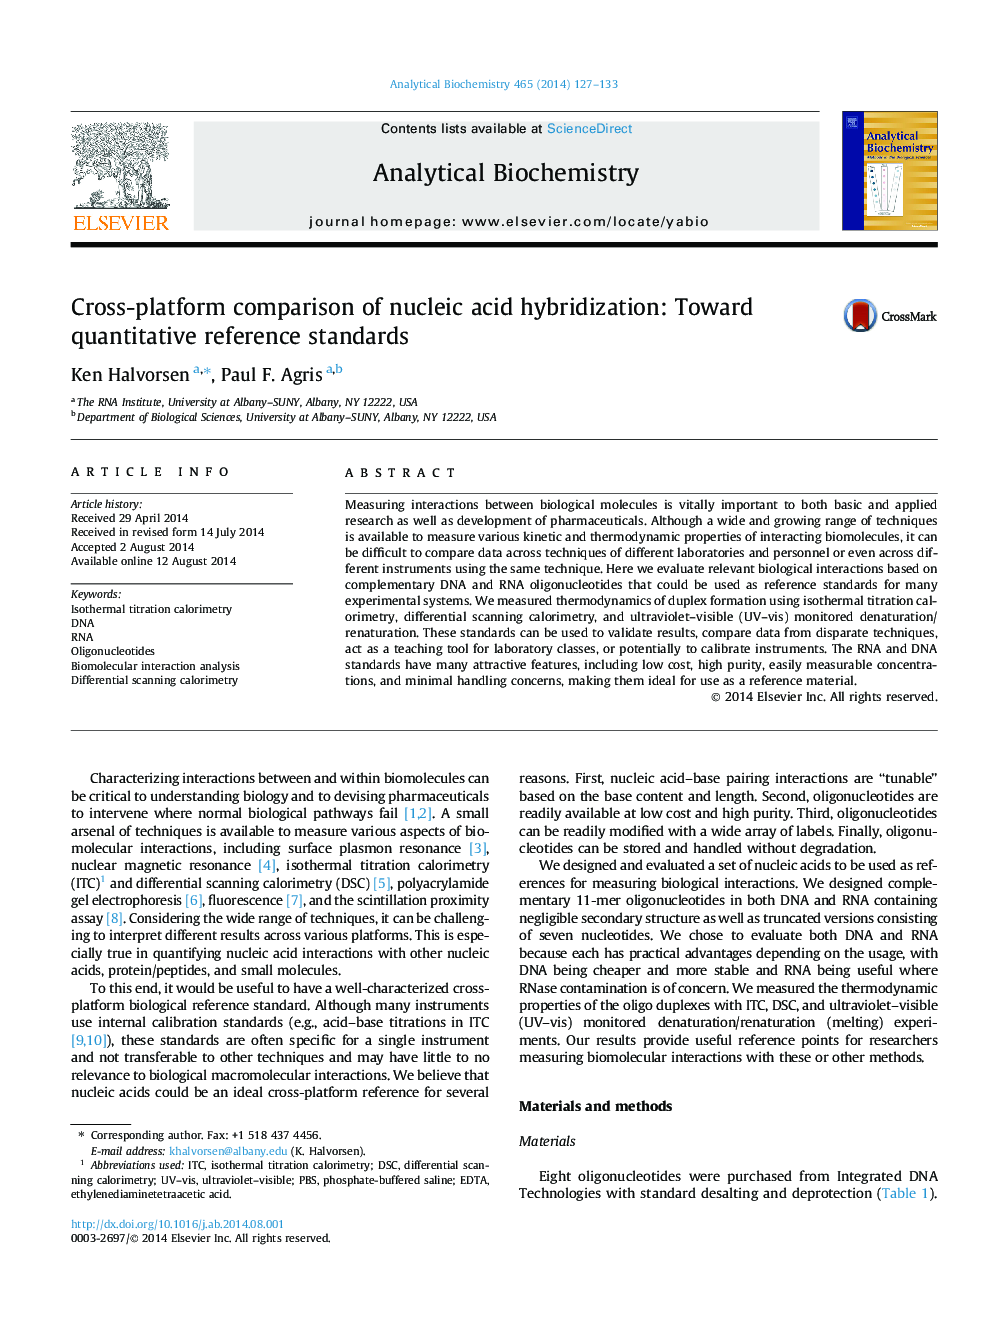 Cross-platform comparison of nucleic acid hybridization: Toward quantitative reference standards